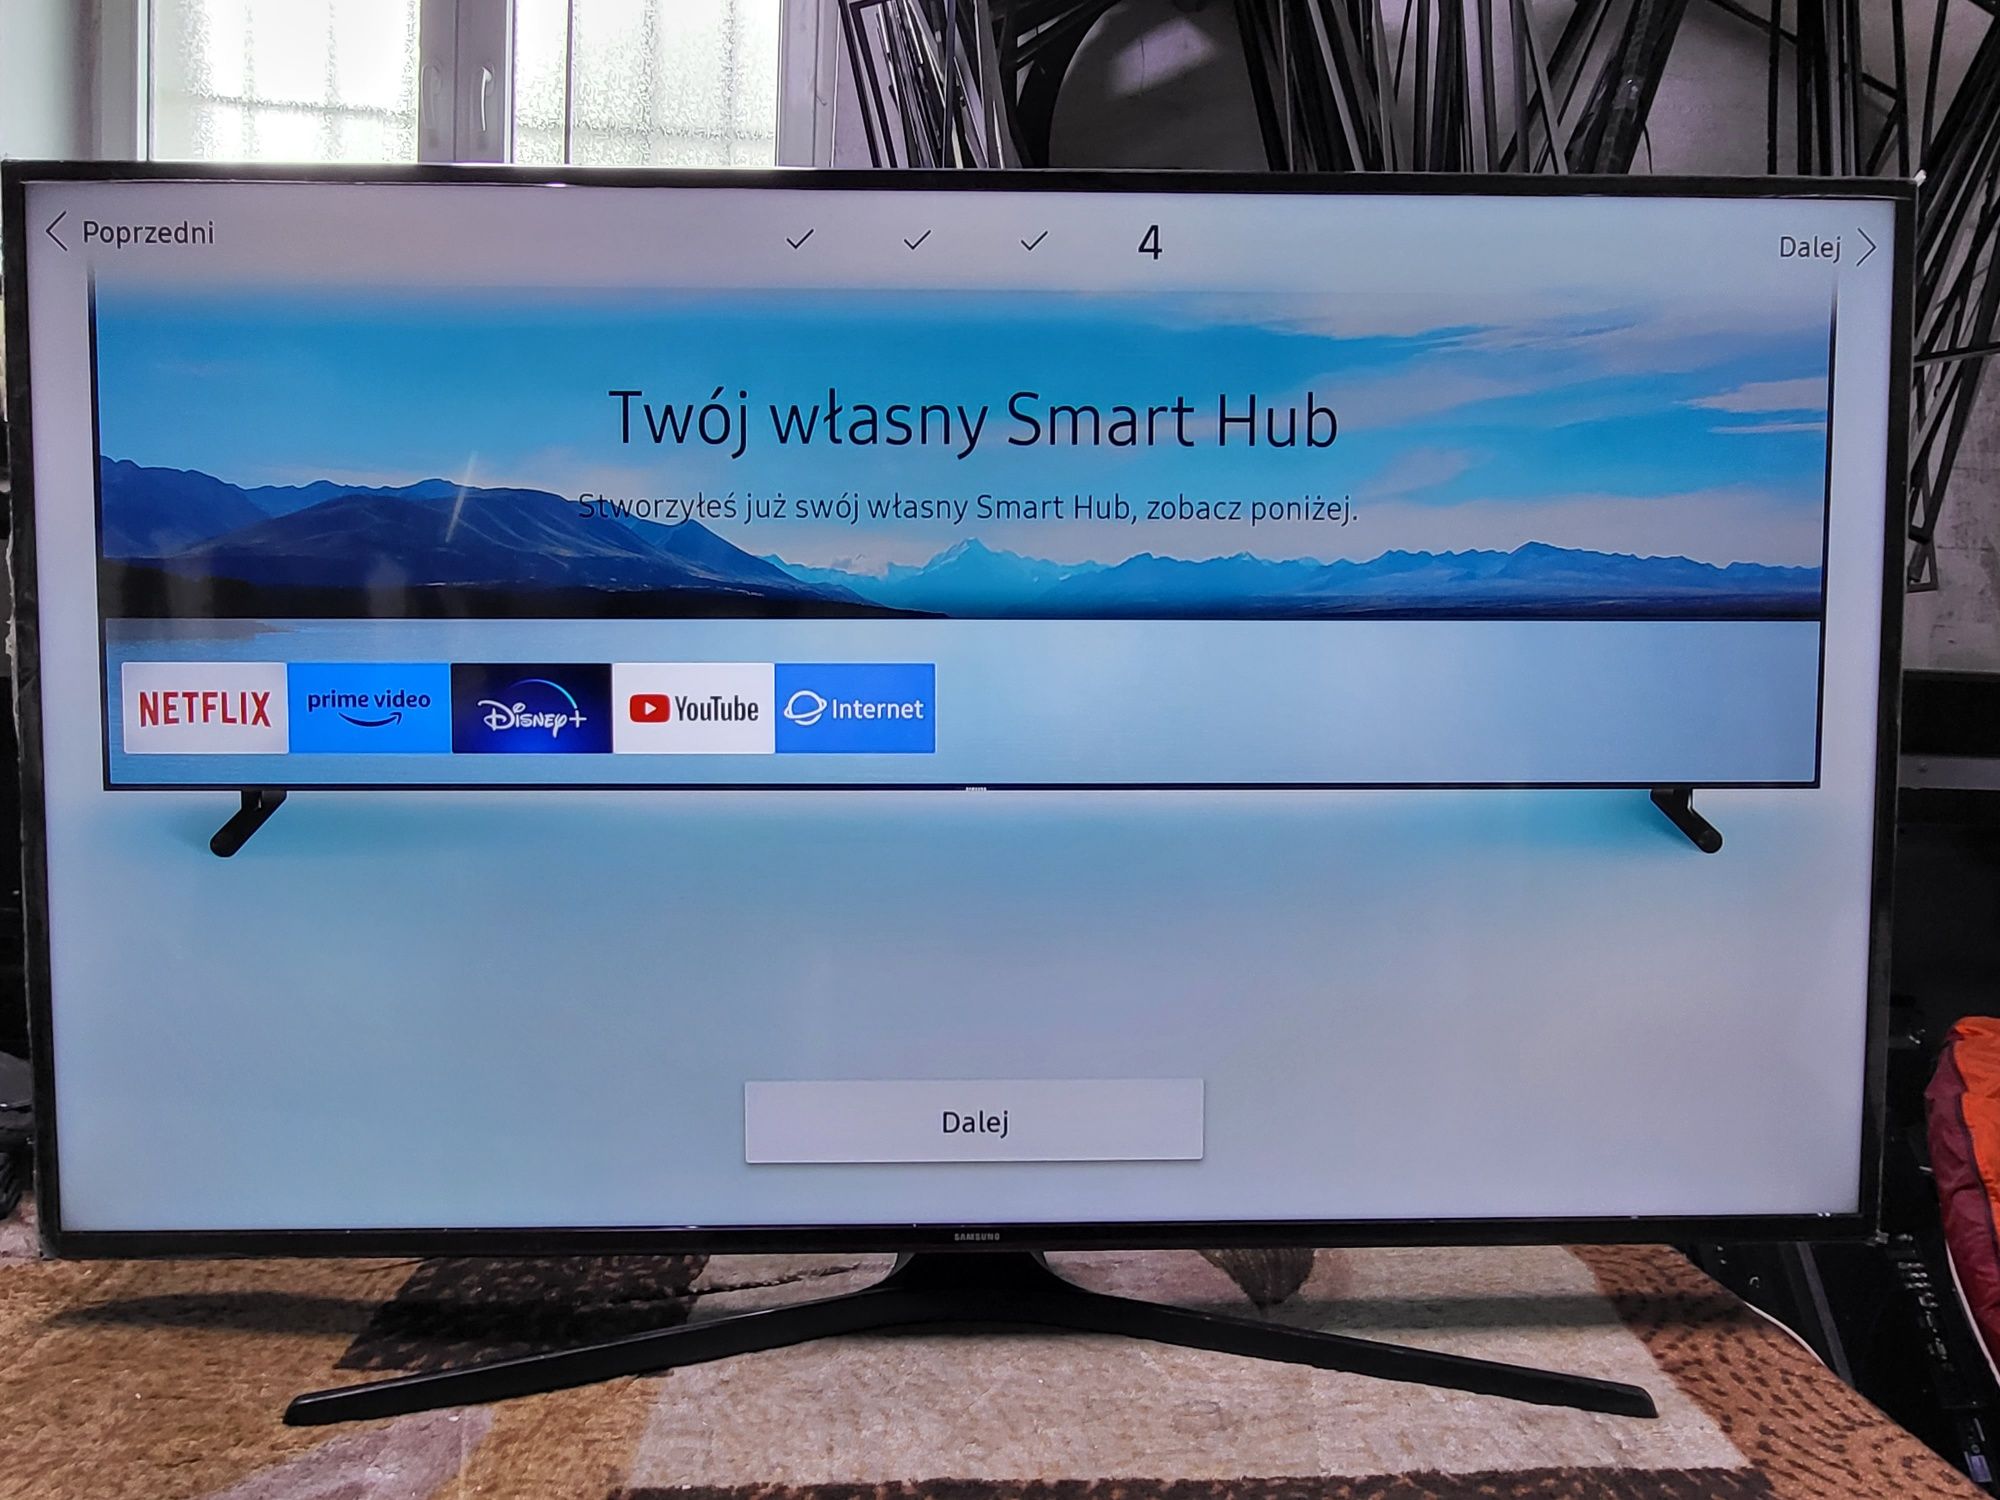 Samsung 50 4k smart tv YouTube Netflix dvbt2 hevc